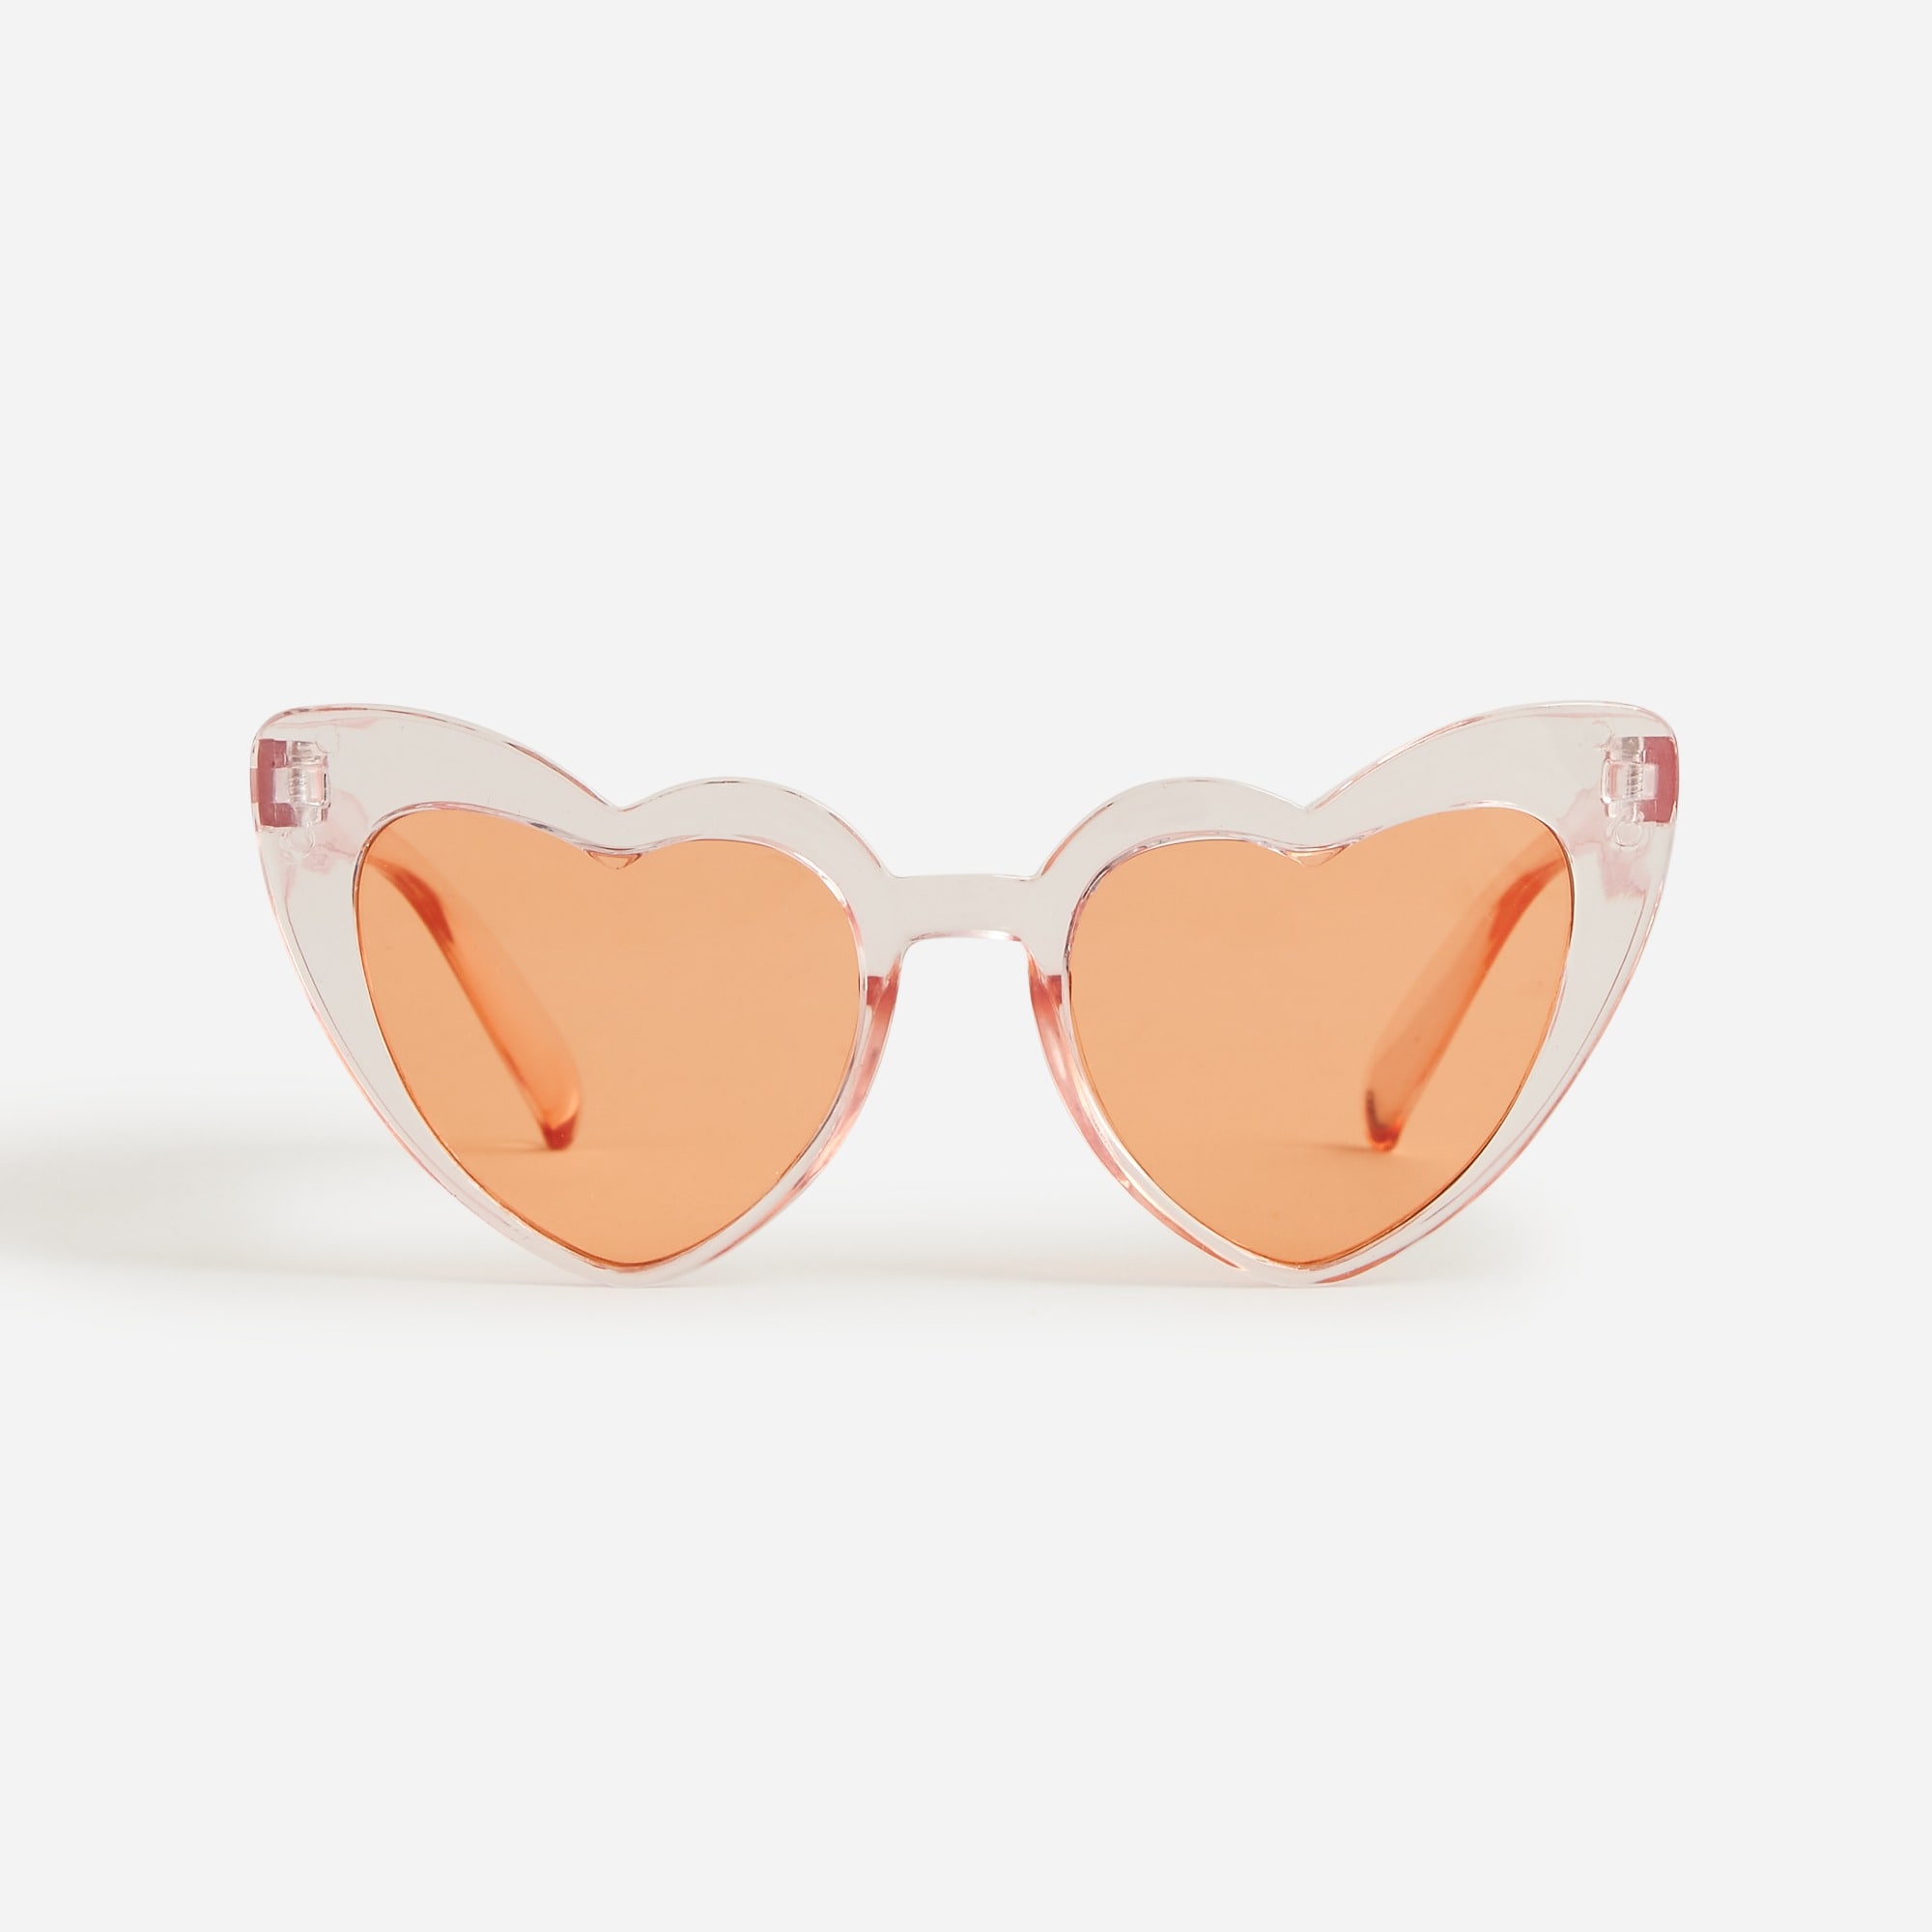  Girls' tinted heart sunglasses